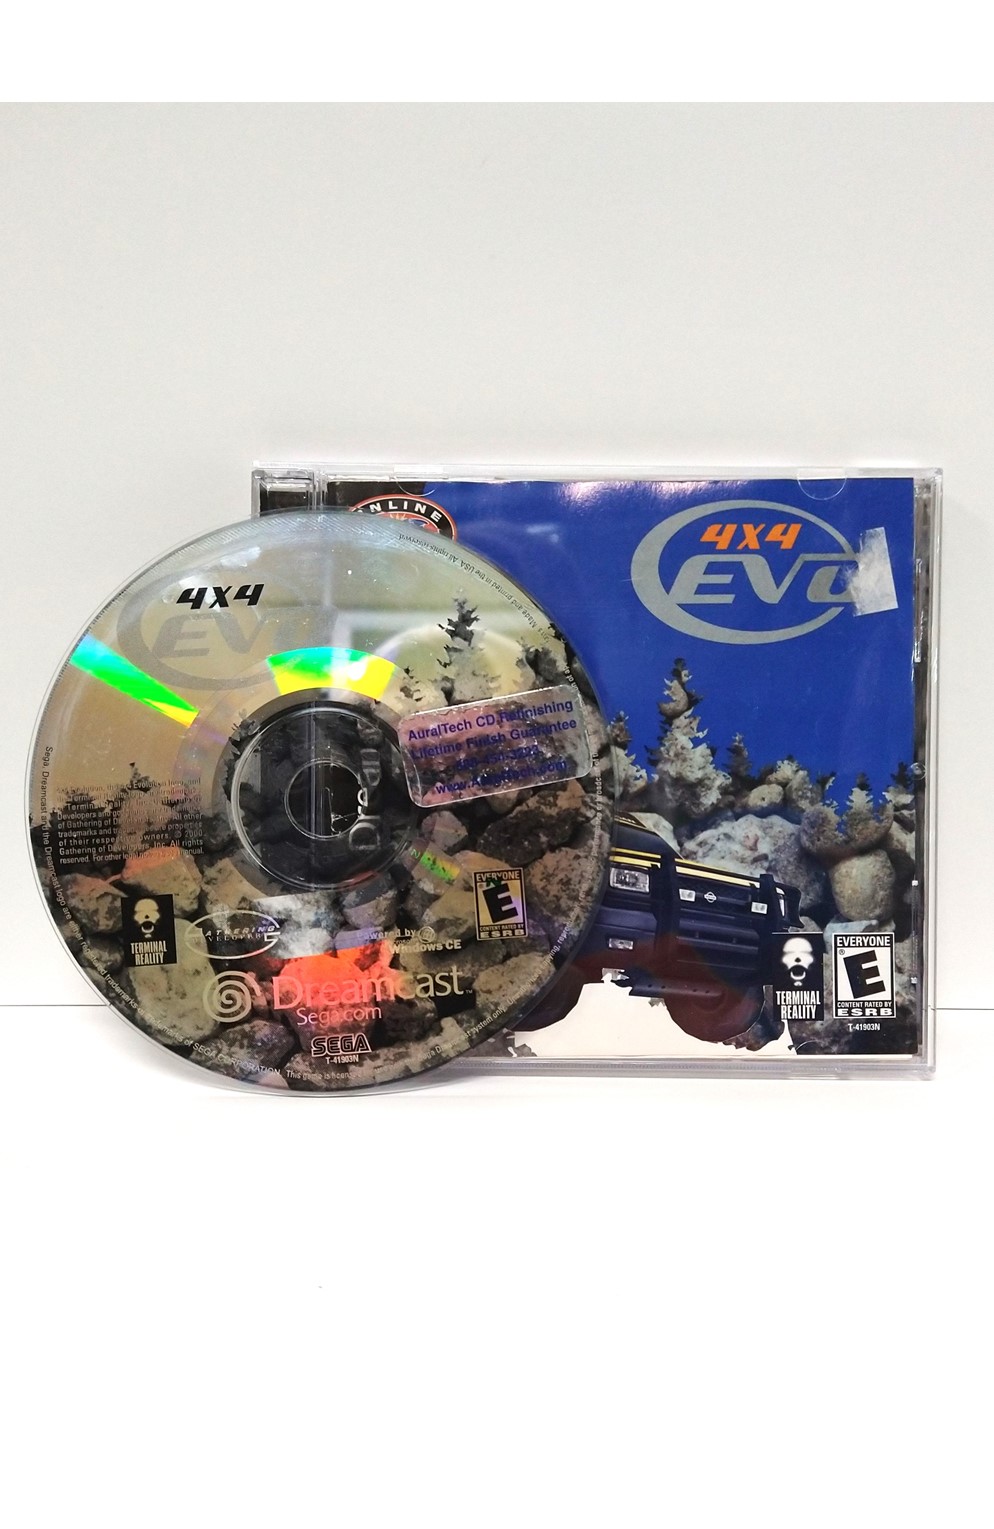 Sega Dreamcast 4X4 Evolution